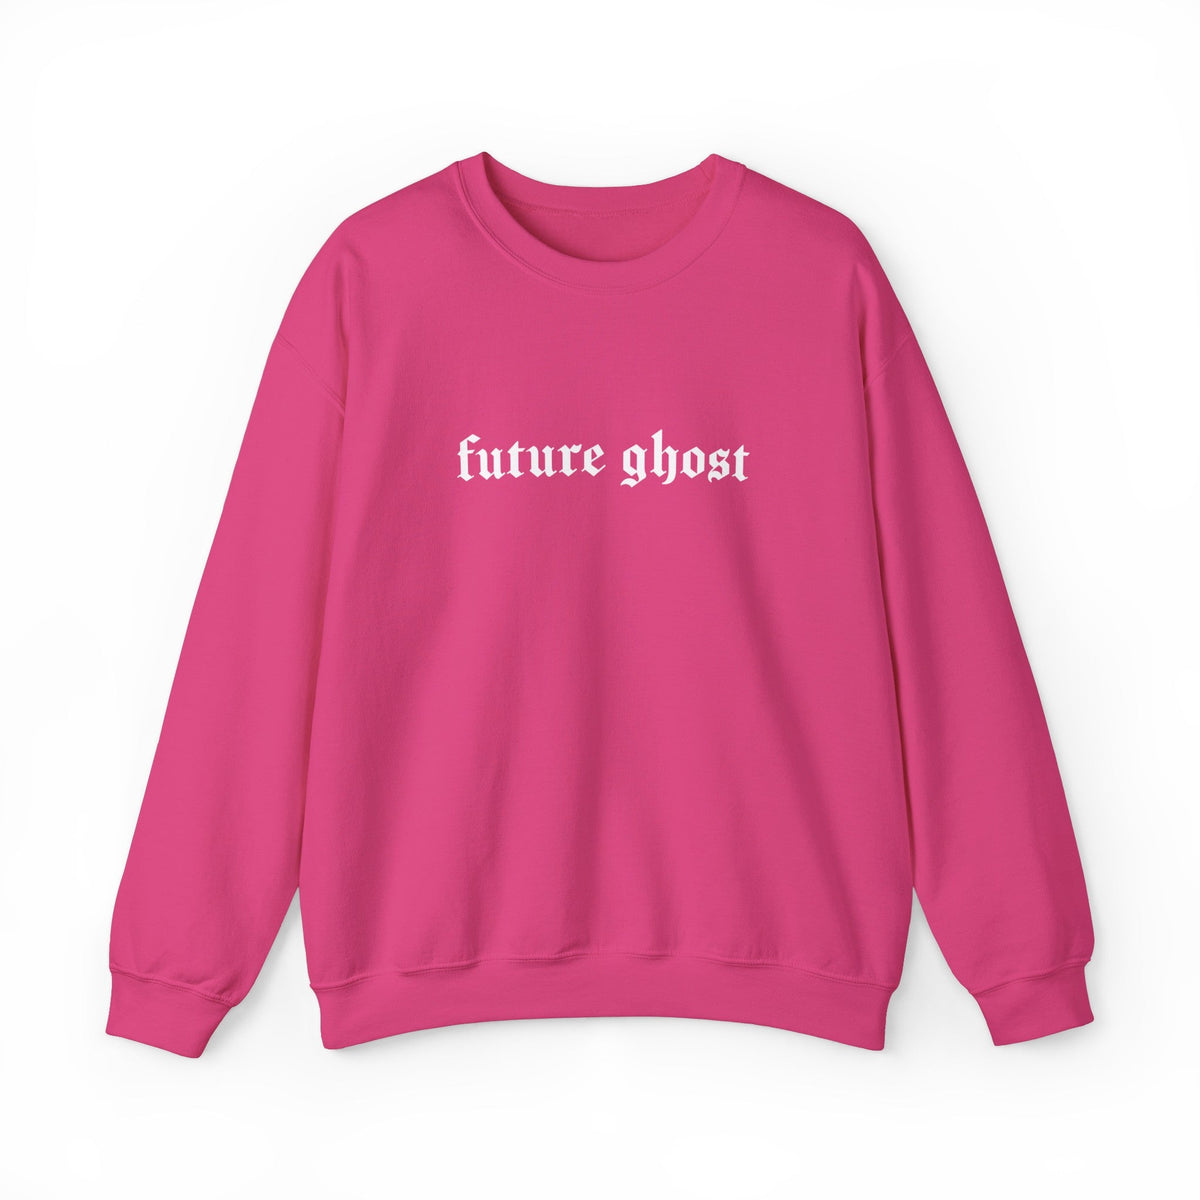 Future Ghost Long Sleeve Crew Neck Sweatshirt - Goth Cloth Co.Sweatshirt30841769953055760798